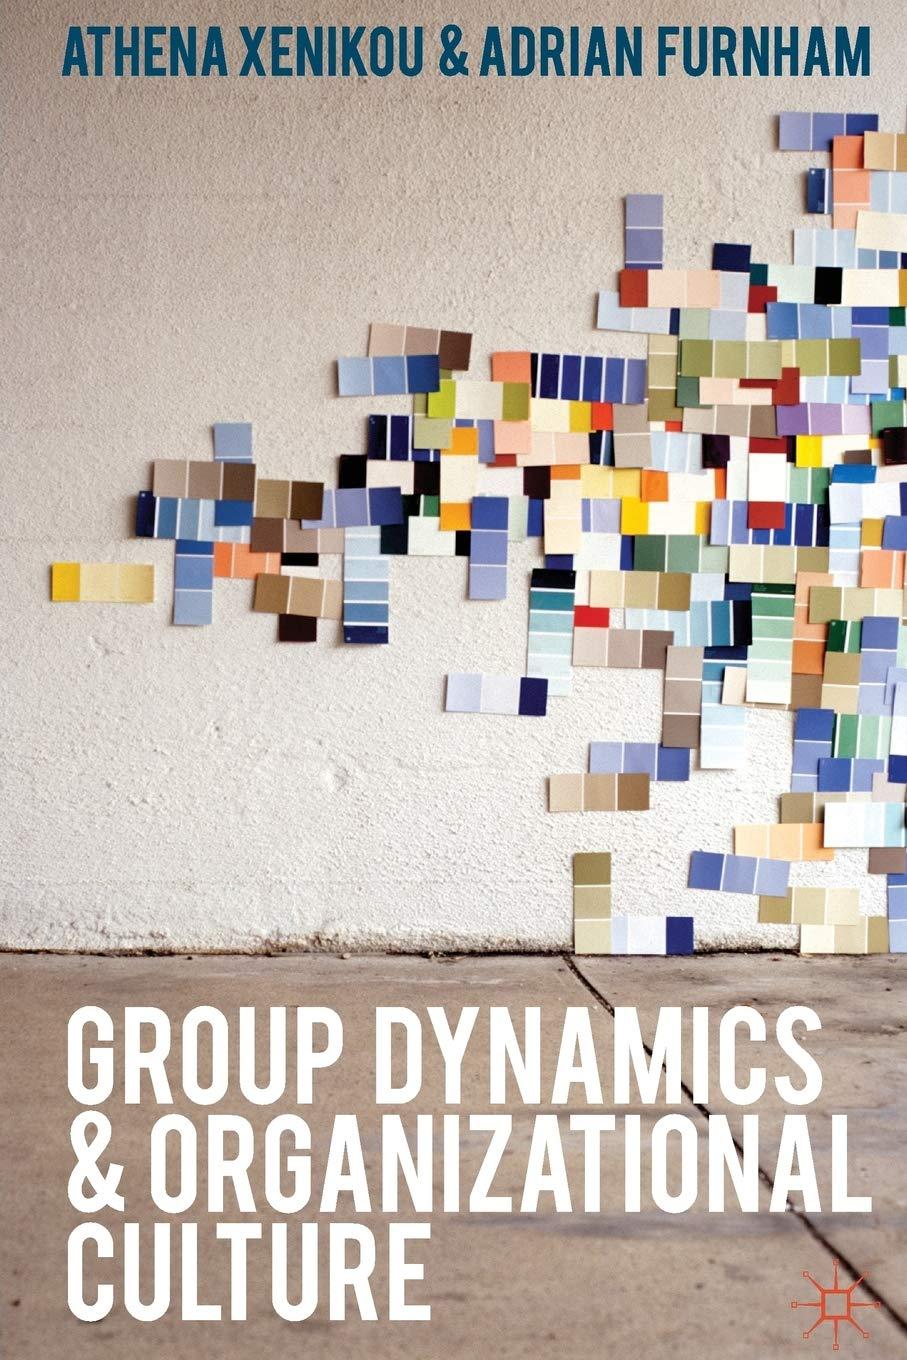 group dynamics and organizational culture 1st edition athena xenikou, d. pendleton 1403987335, 978-1403987334